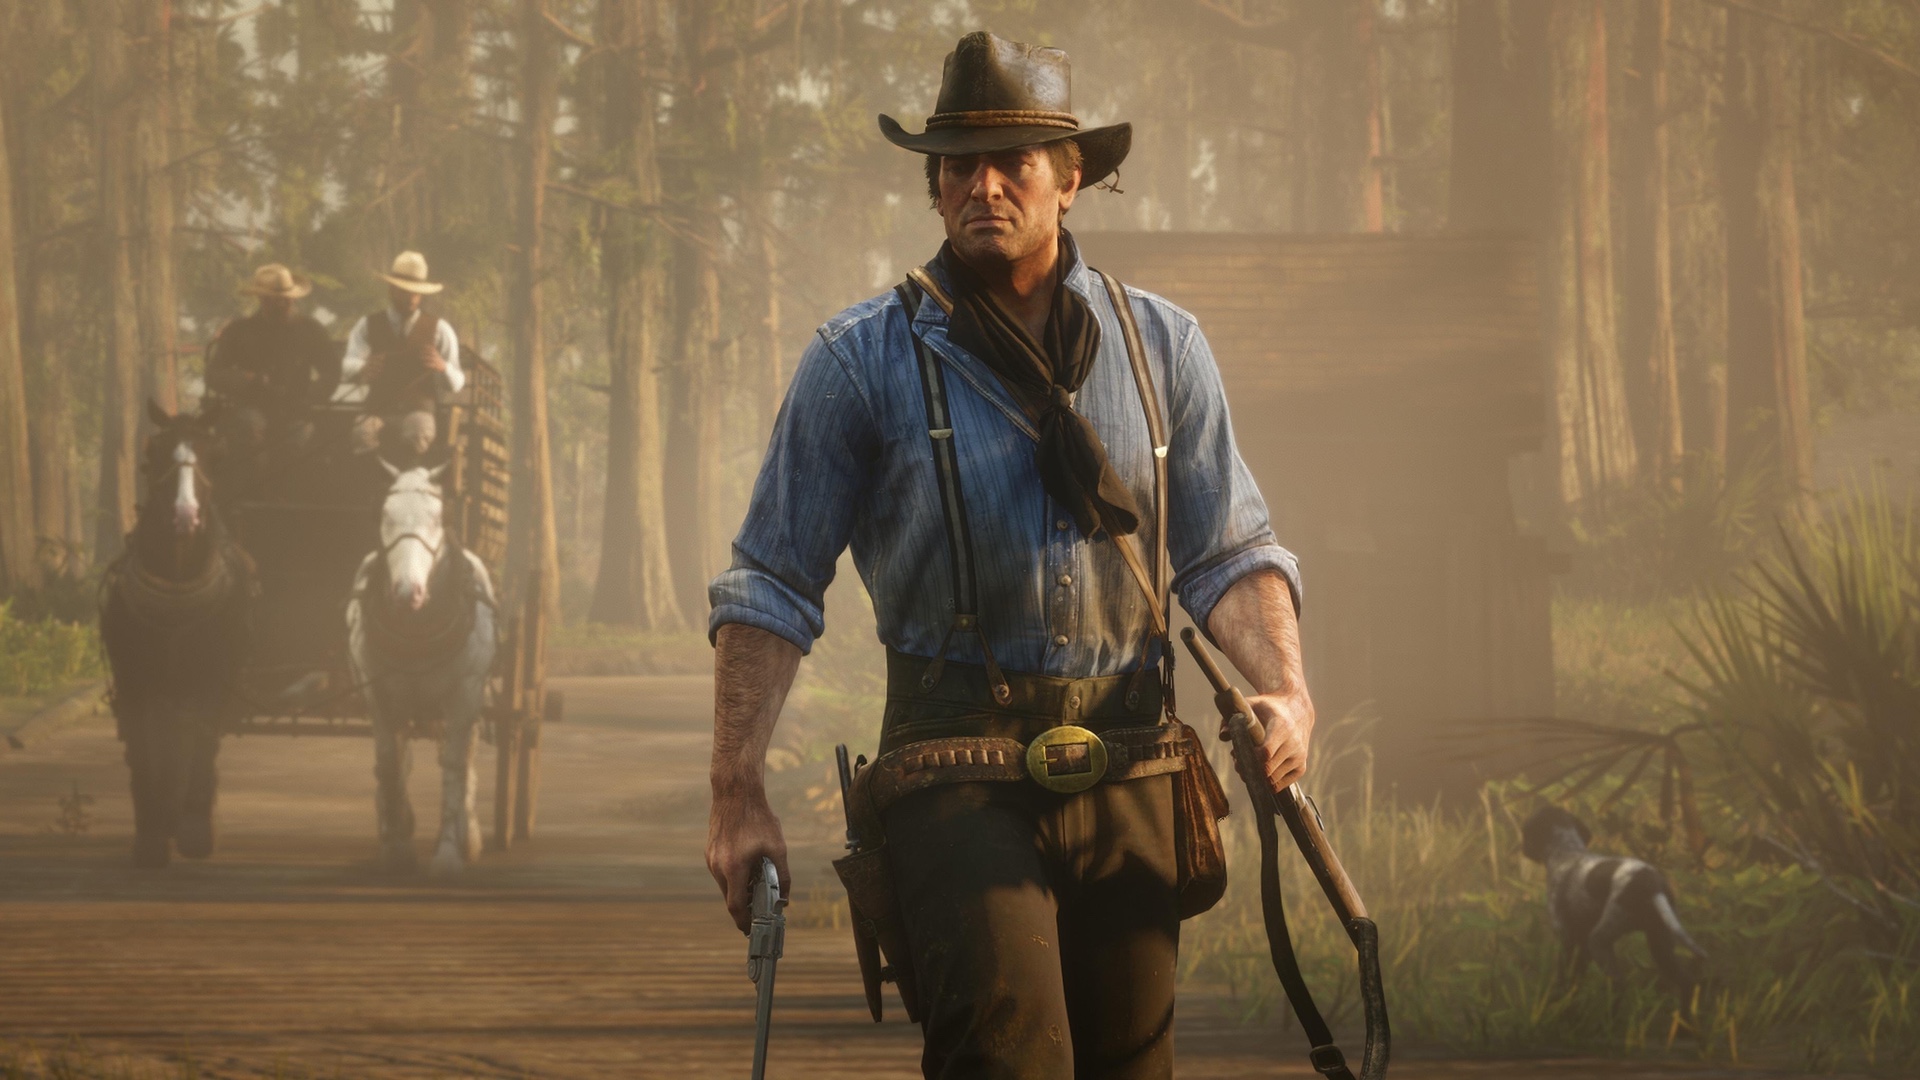 authentic cowboy outfit